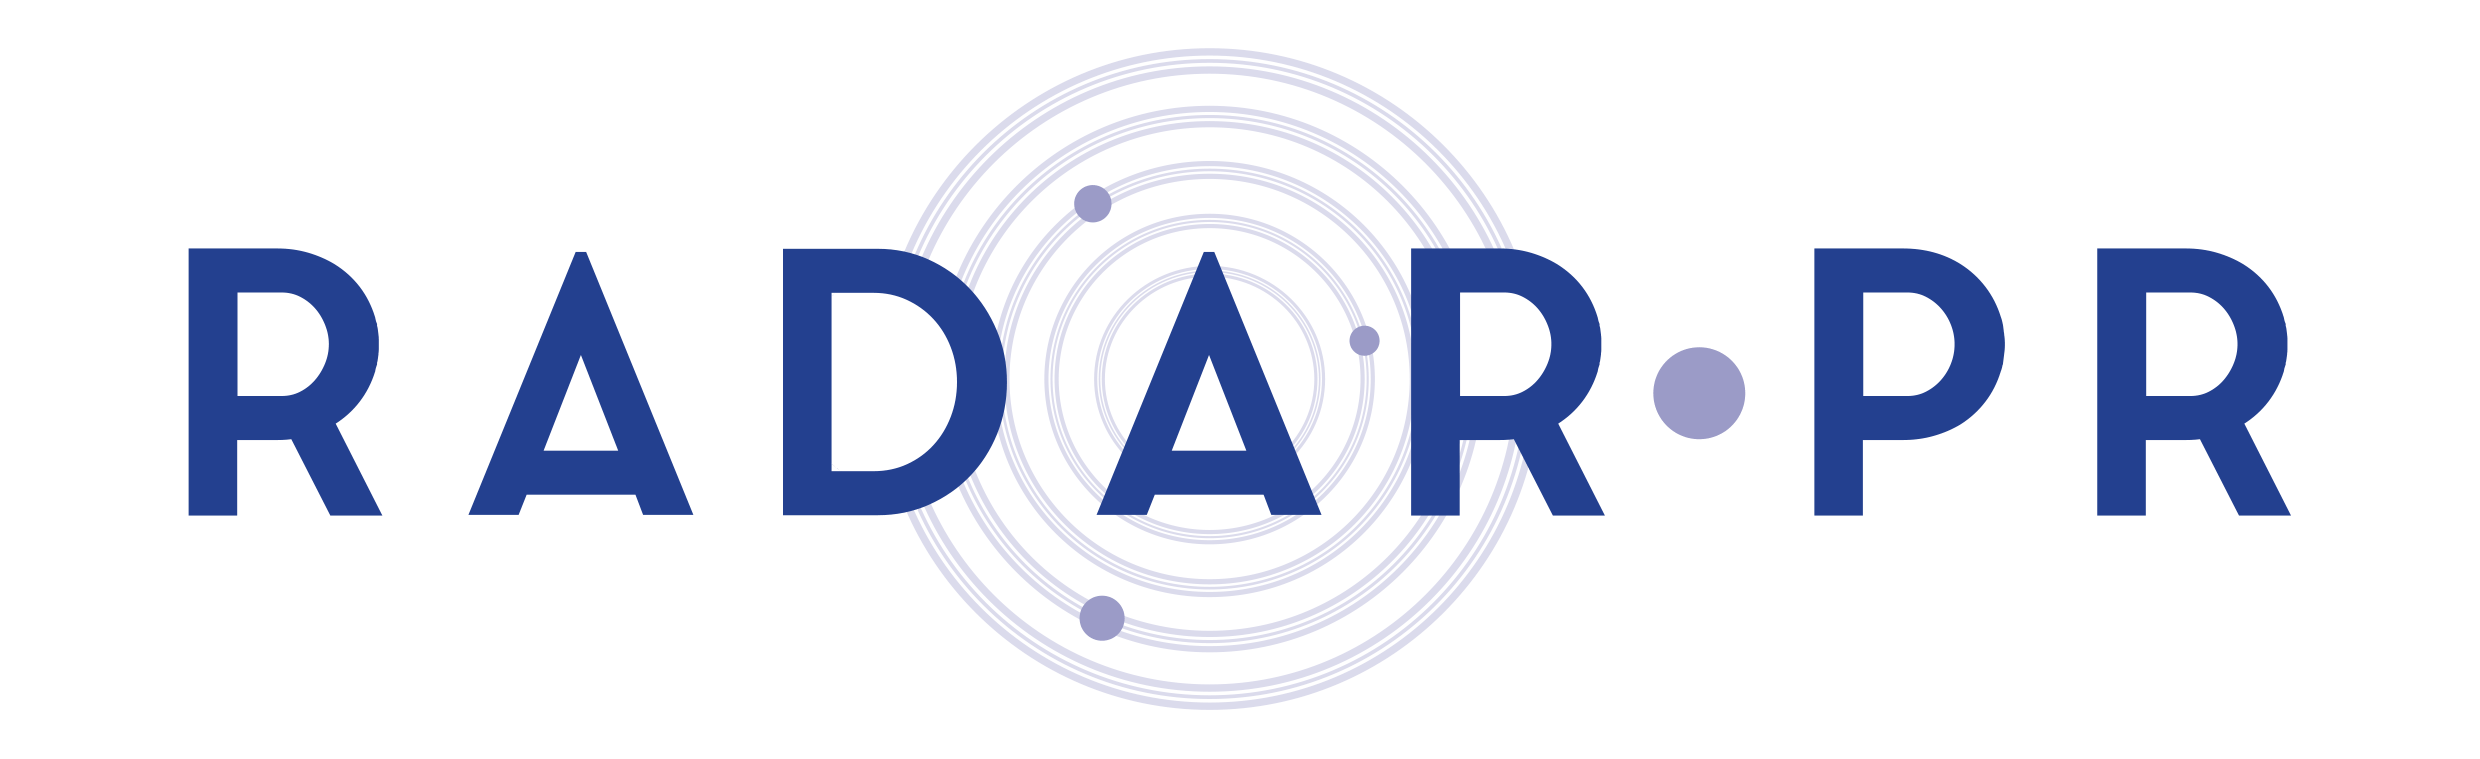 Blue Radar Logo - Radar Public Relations – Be Above It